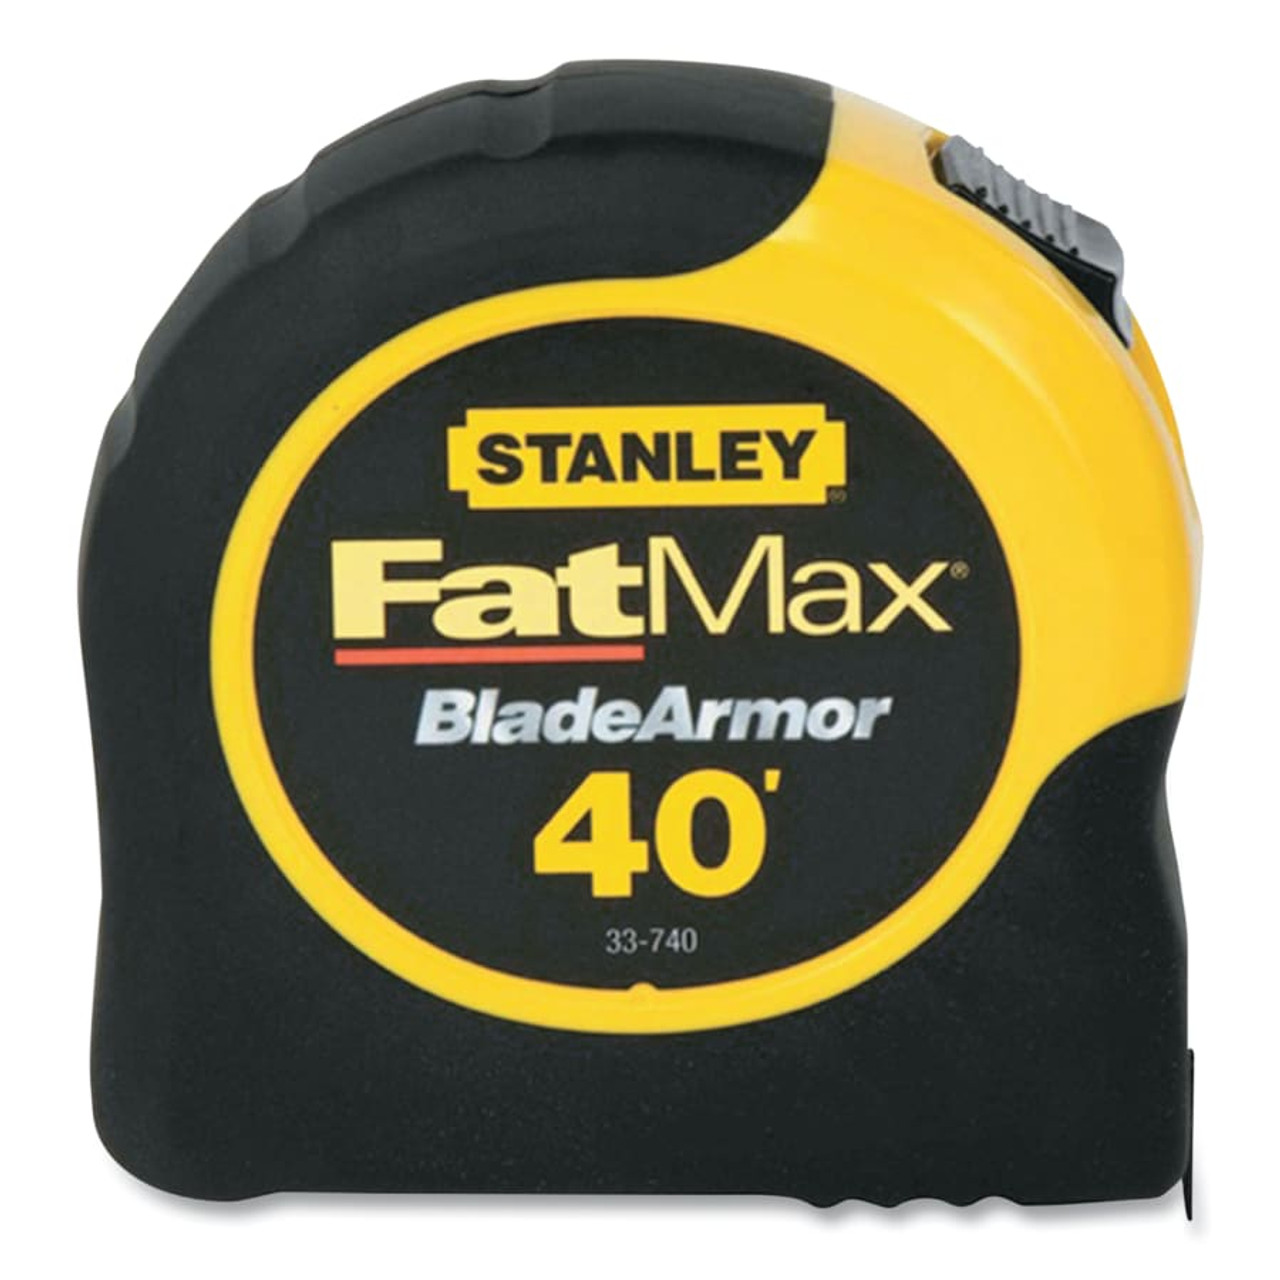 FatMax Classic Tape Measure, 1-1/4 in W x 40 ft L, SAE, Black/Yellow Case (33-740L)